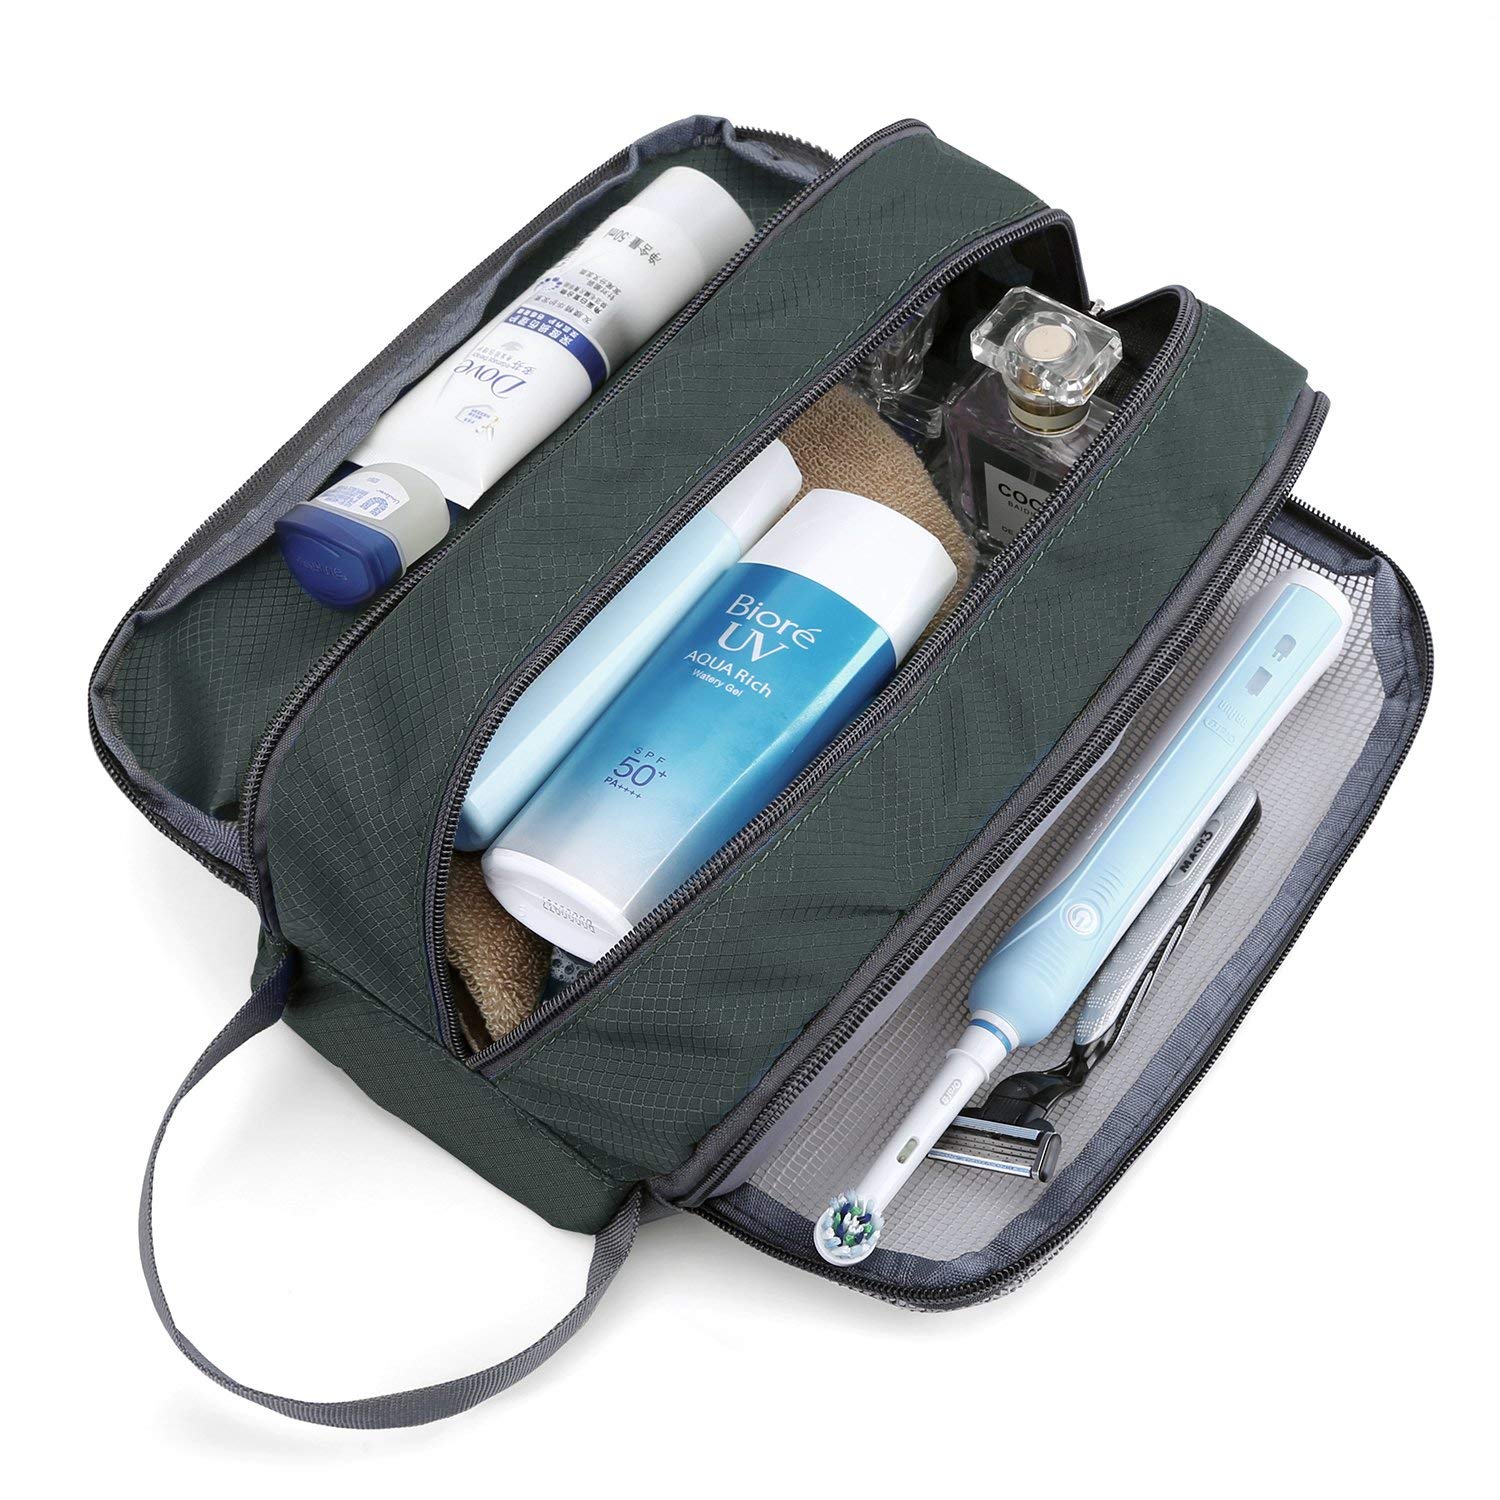 Water Resistant Travel Toiletry Bag Portable Makeup Pouch Bathroom Wash Bag Men toiletry bag